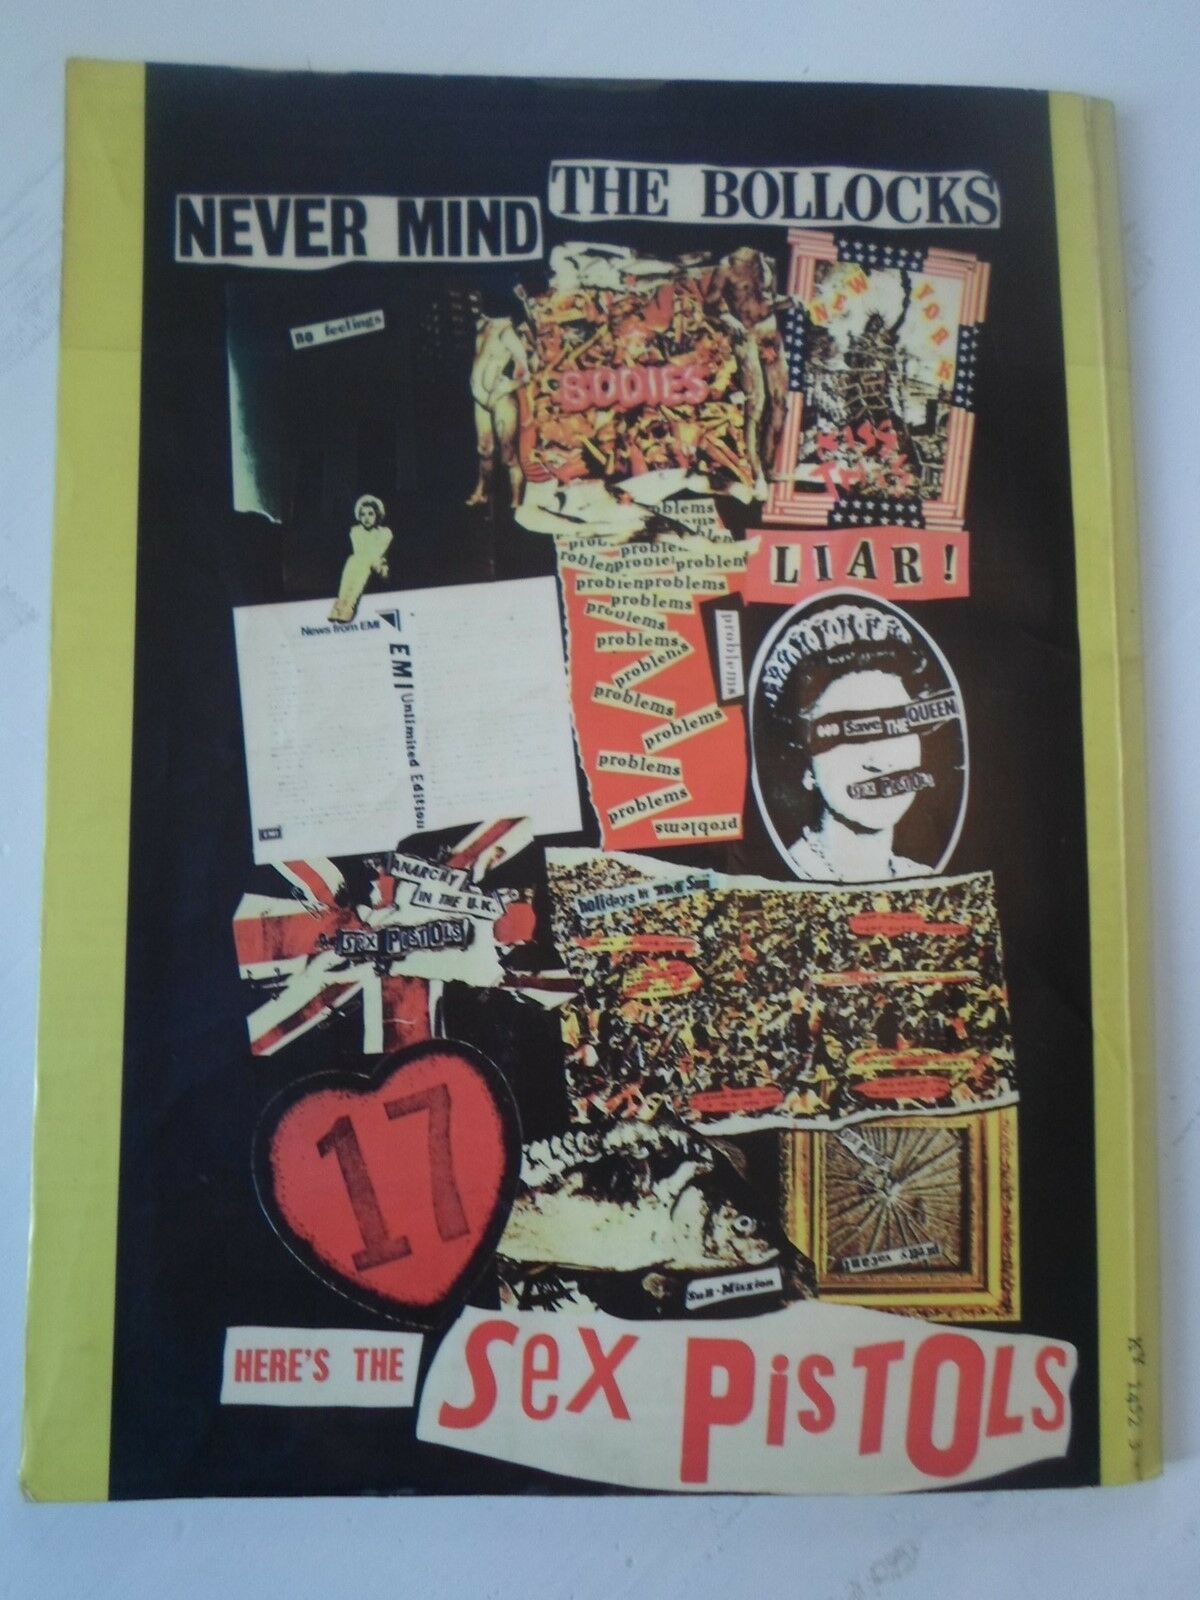 Sex Pistols, Never Mind The Bollocks.